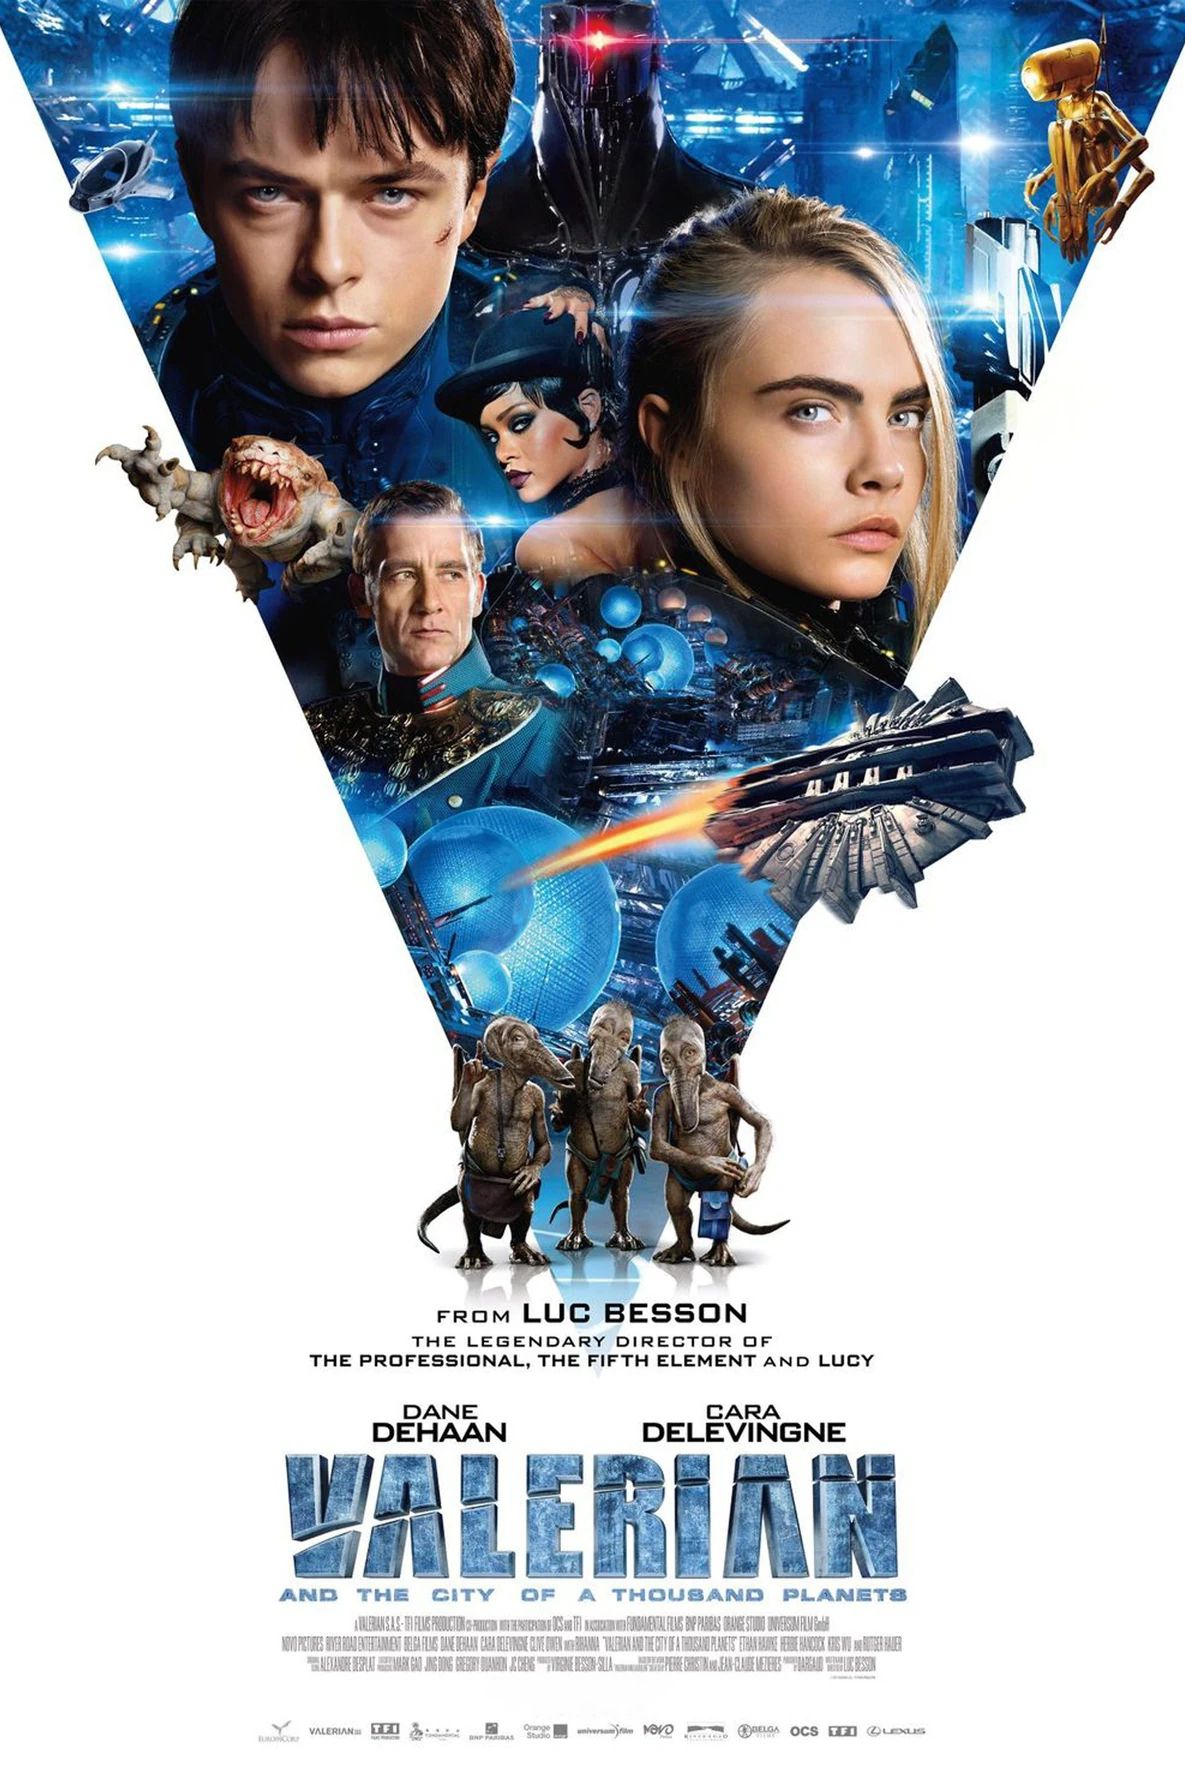 Valerian Movie Poster